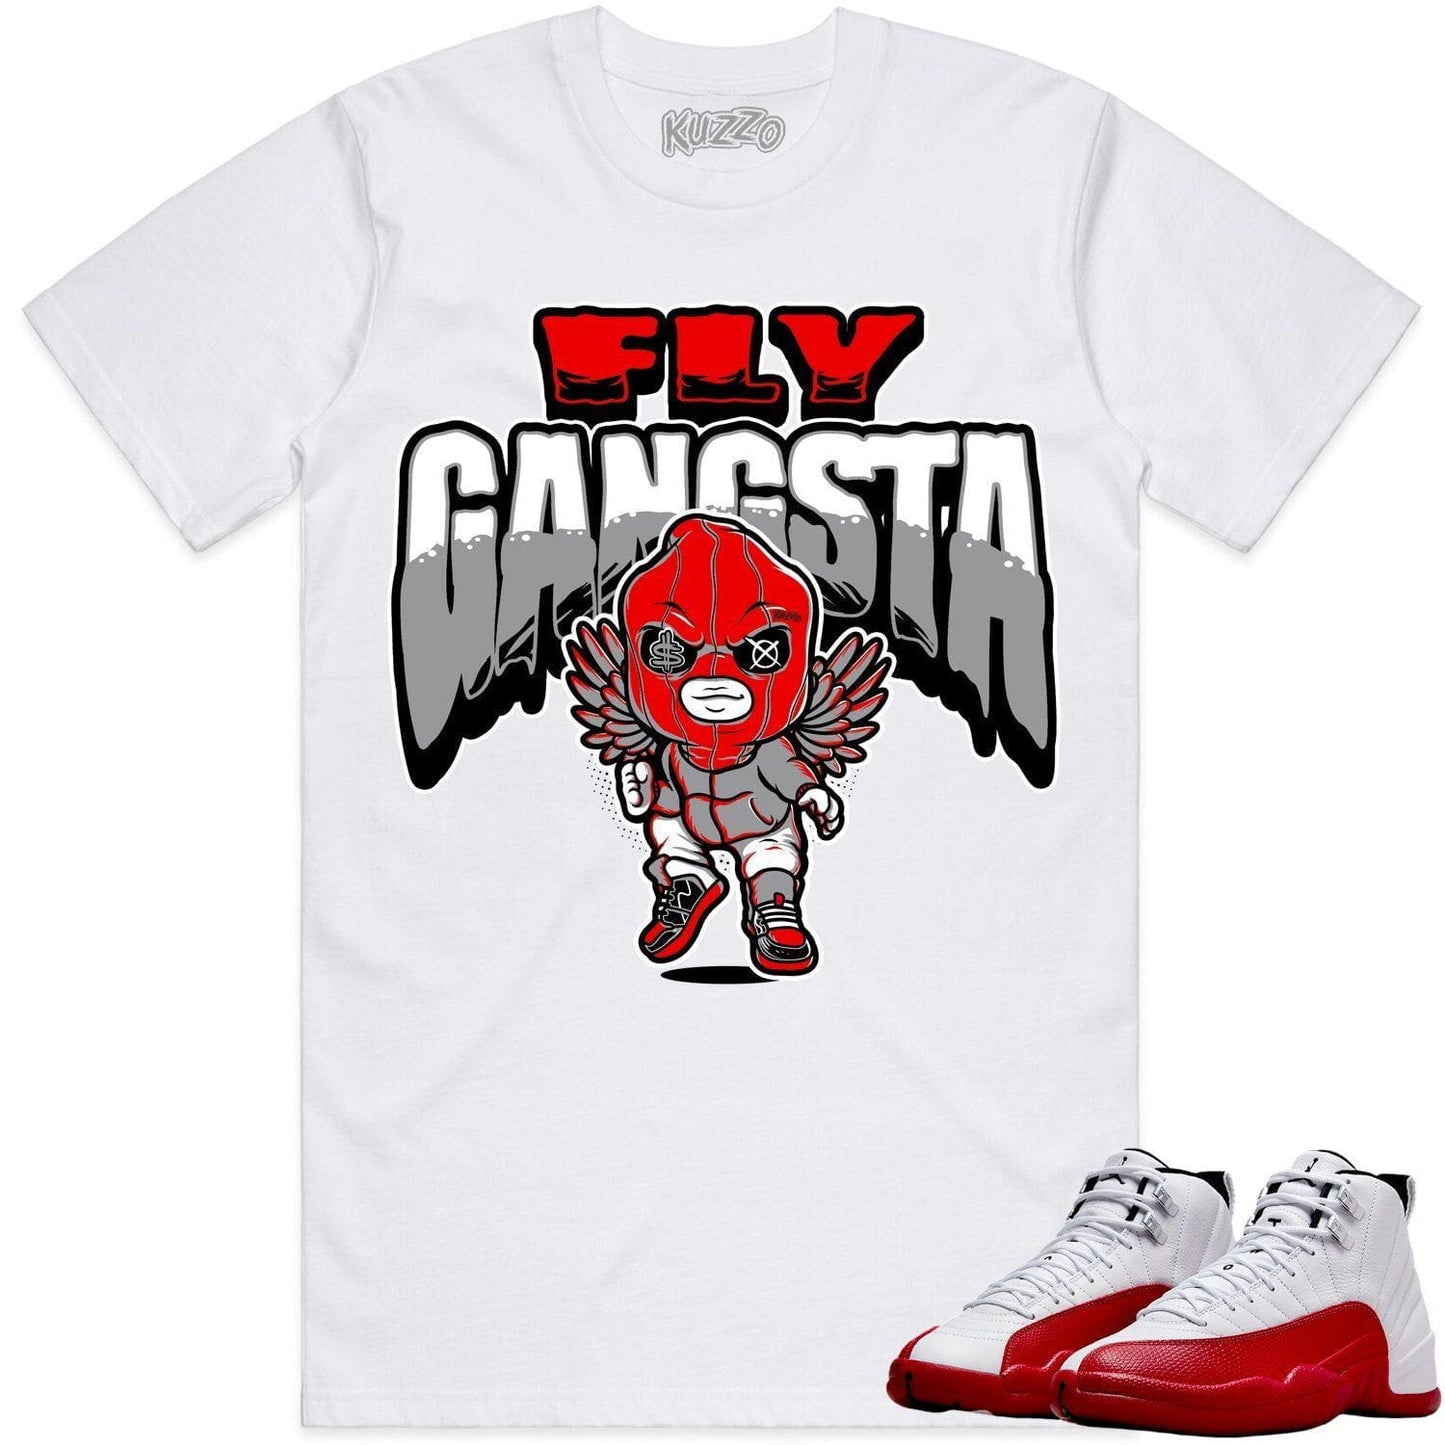 Cherry 12s Shirt - Jordan Retro 12 Cherry Shirts - Red Fly Gangsta